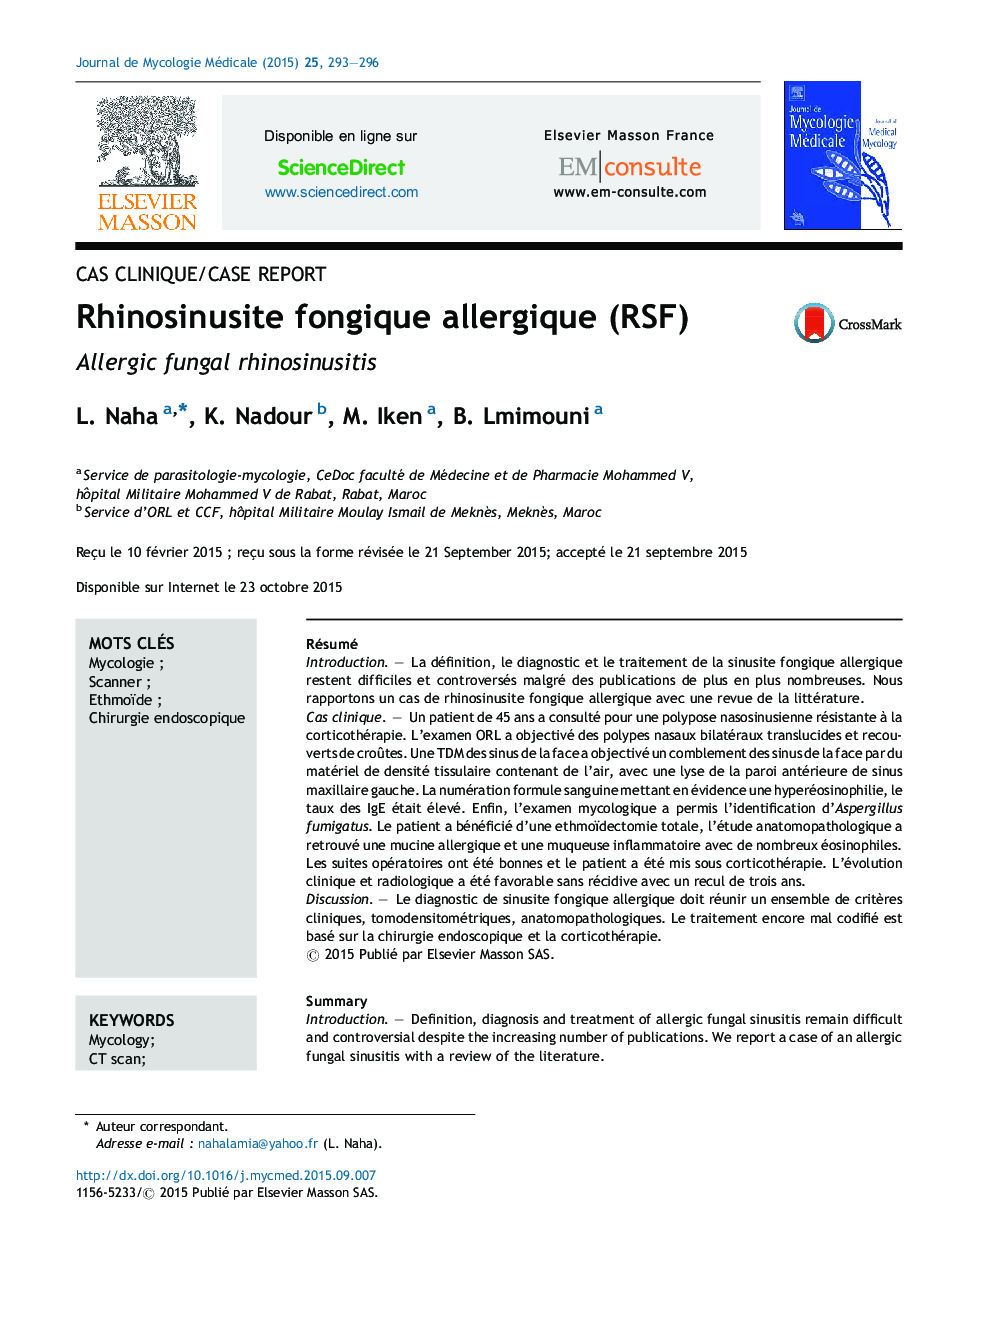 Rhinosinusite fongique allergique (RSF)